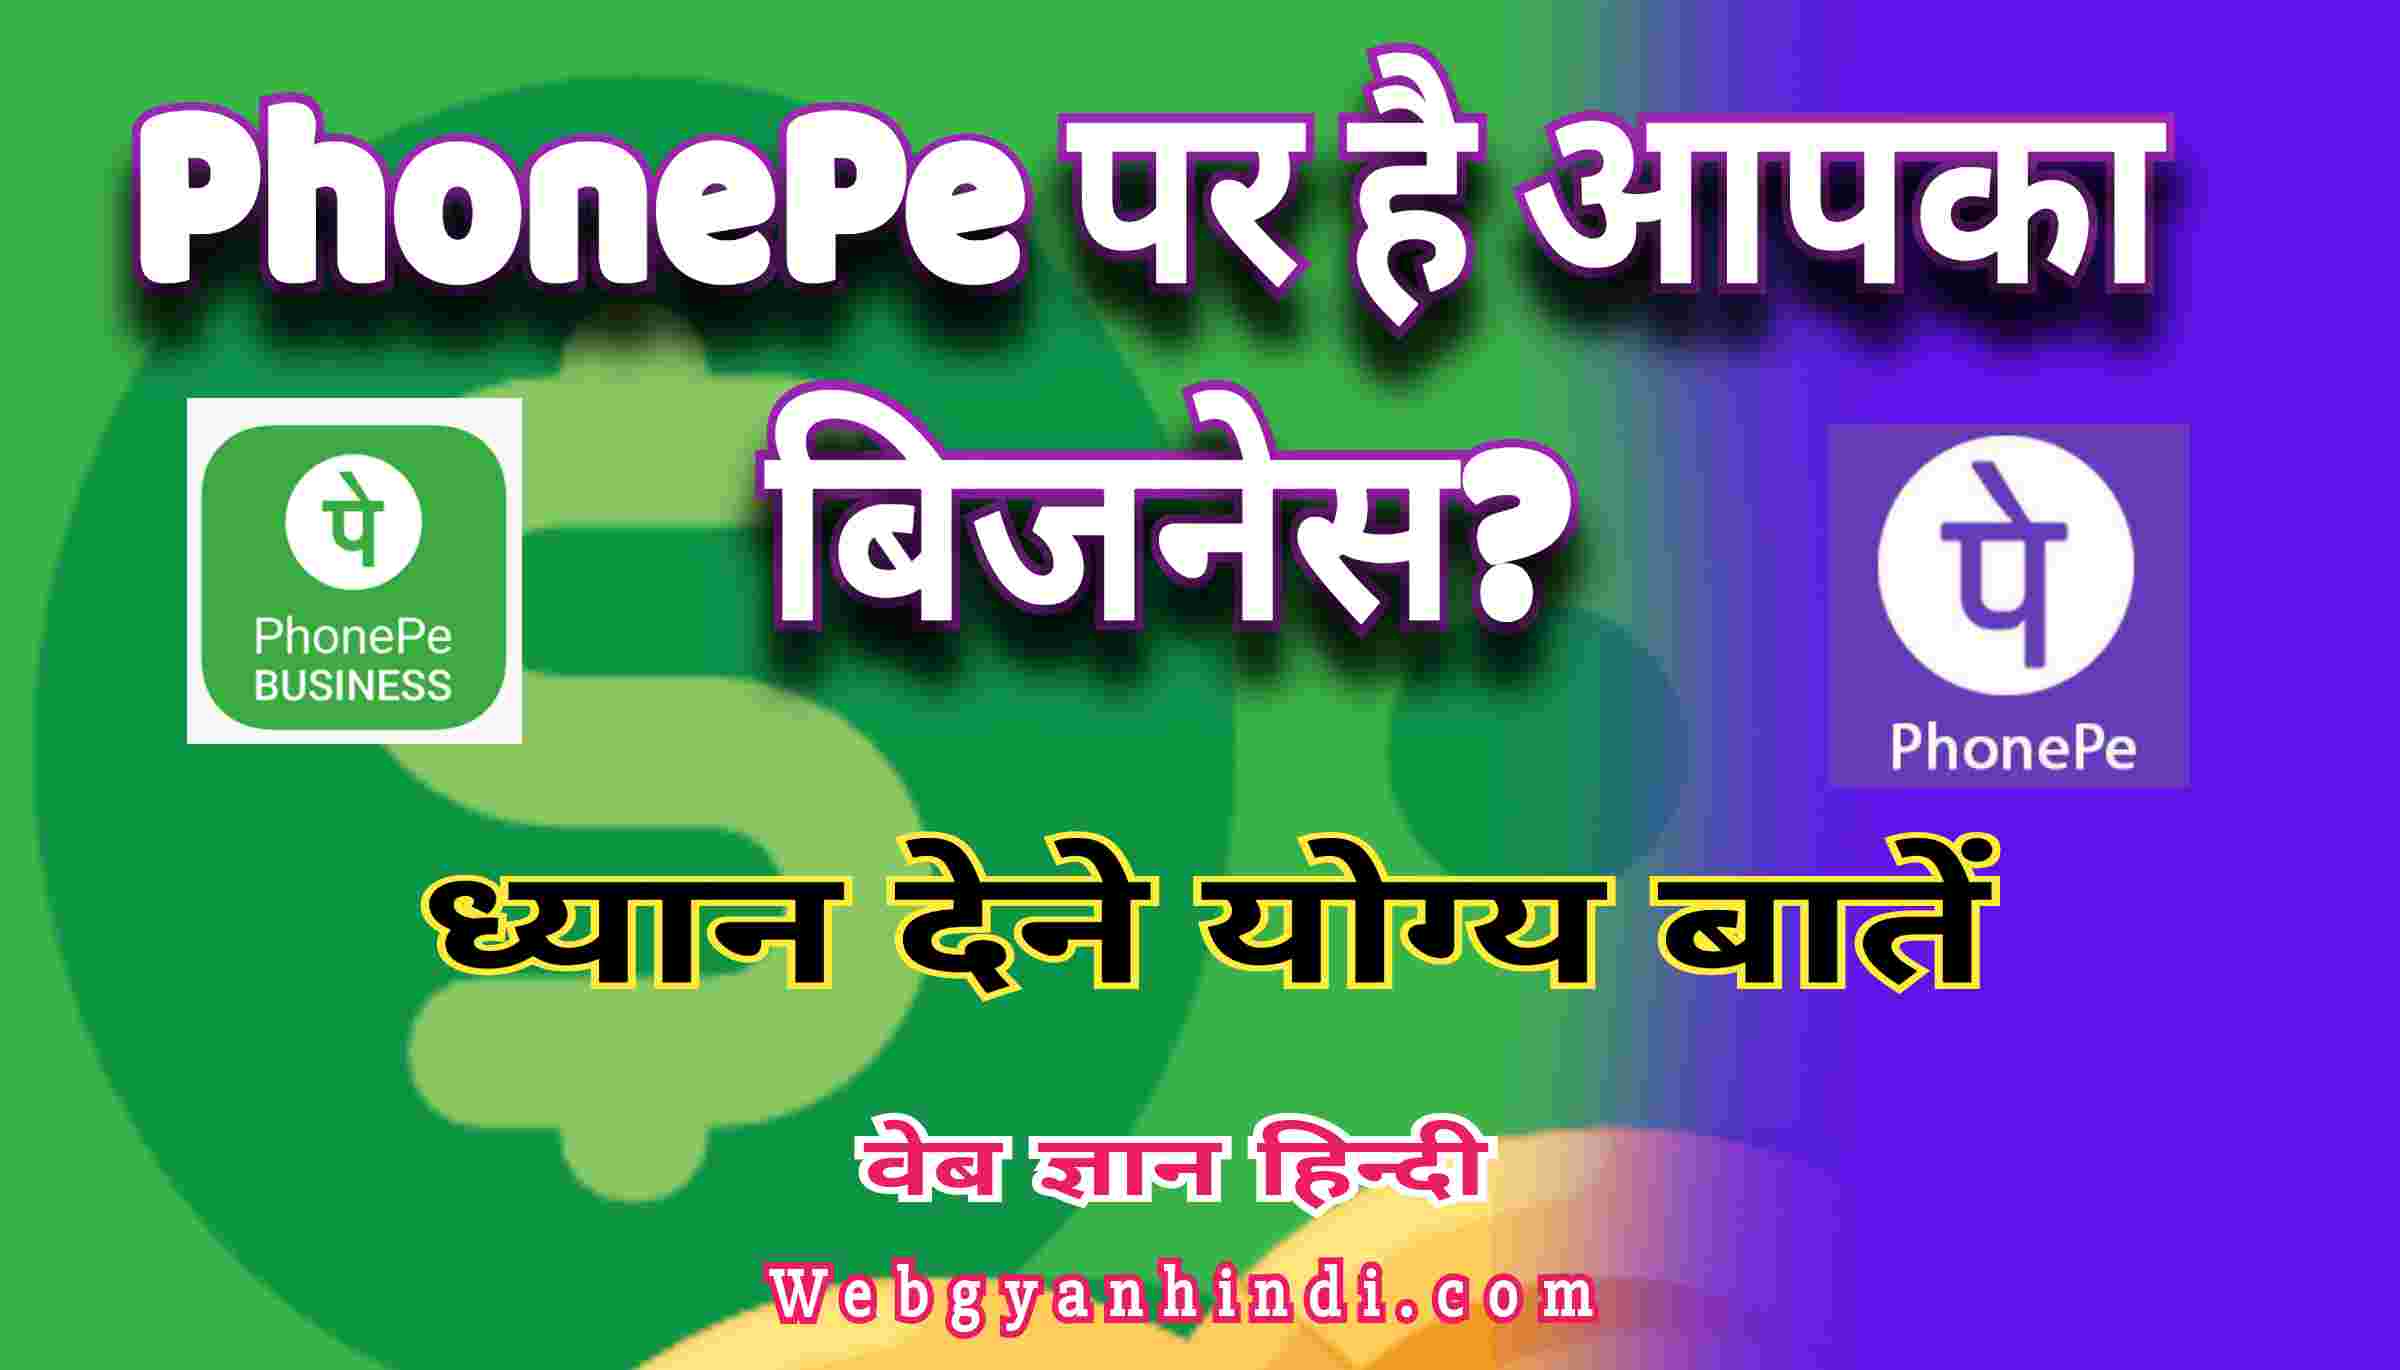 PhonePe ki puri jankari hindi me